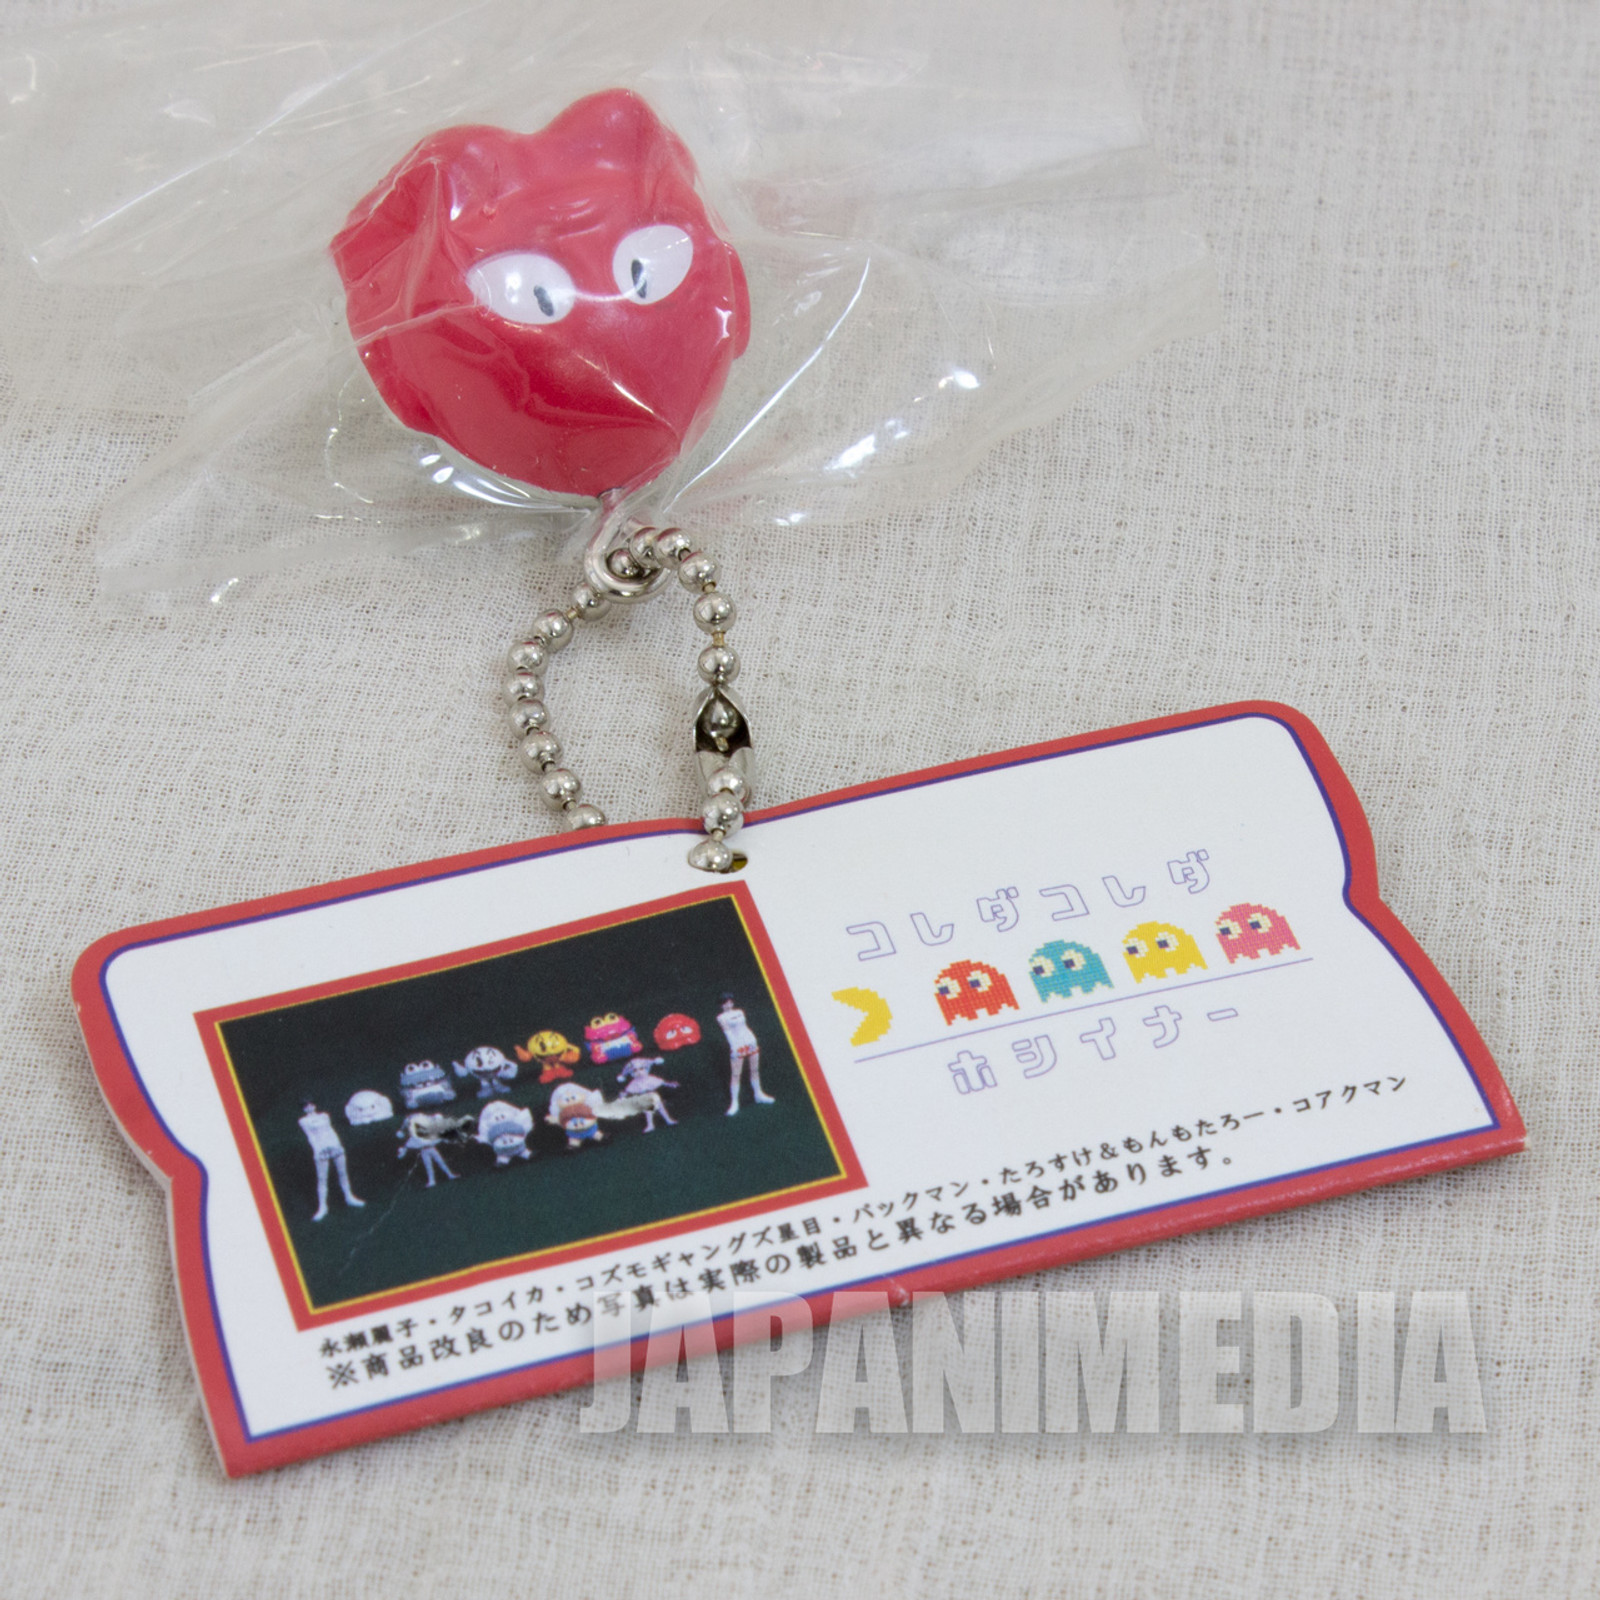 Retro Rare! Tako-Ika Panic Color Figure Ballchain Namco JAPAN